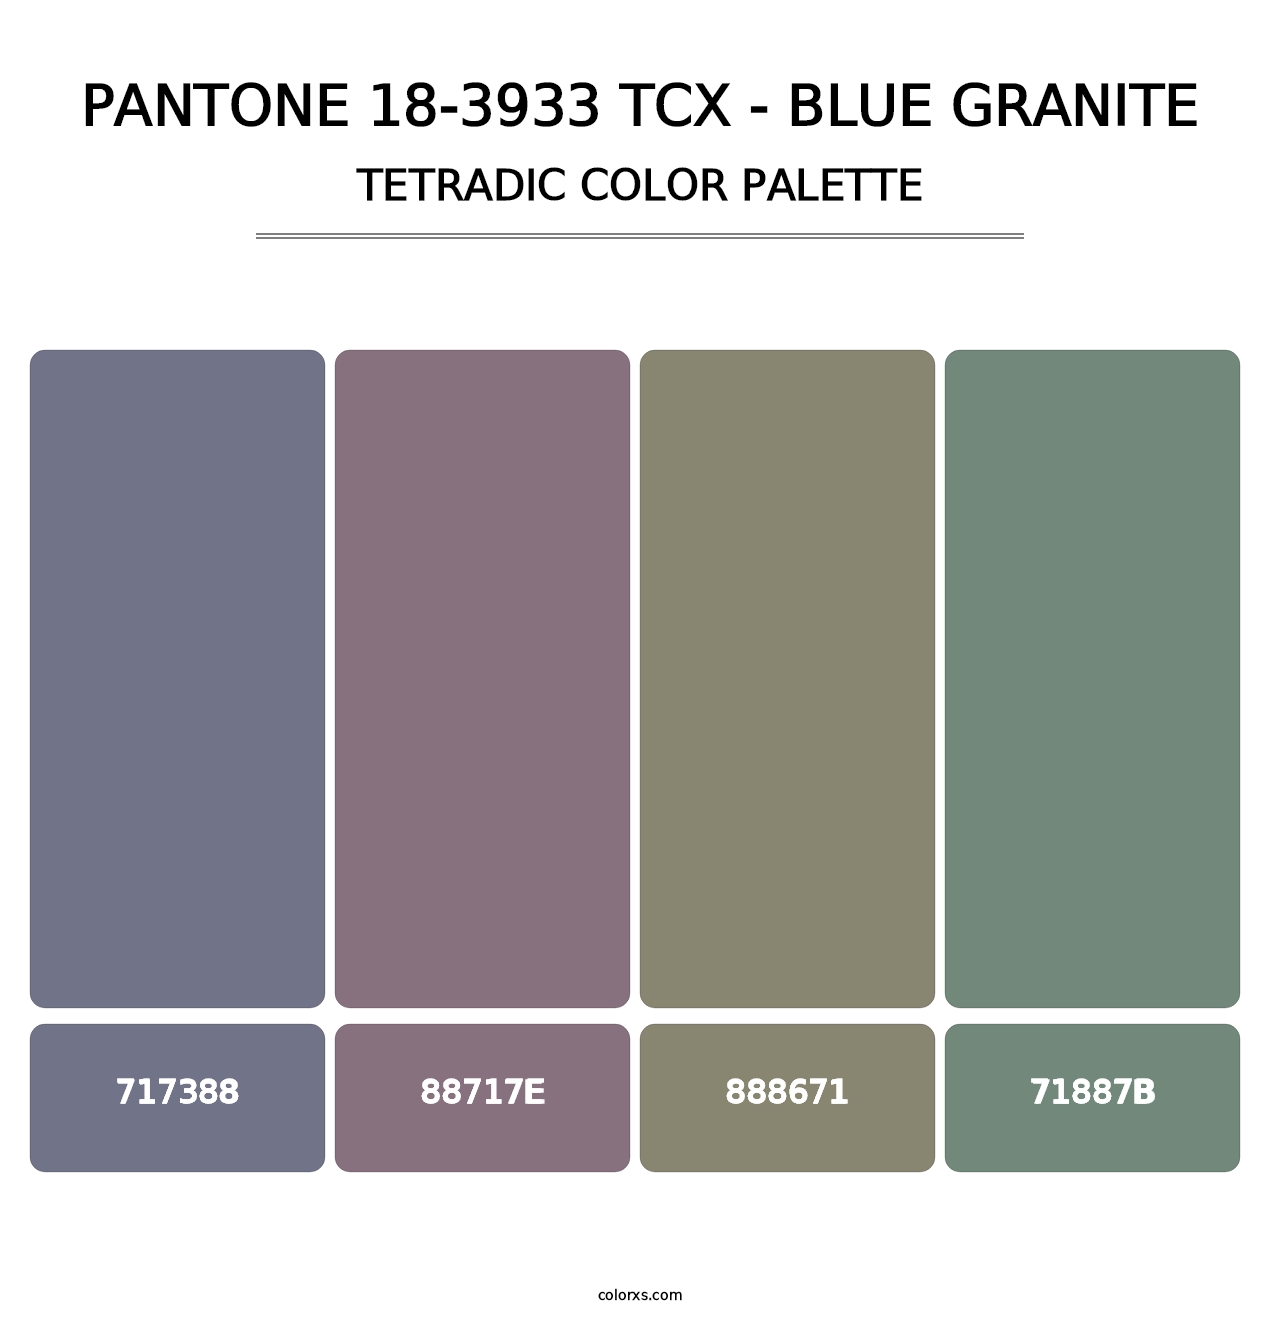 PANTONE 18-3933 TCX - Blue Granite - Tetradic Color Palette